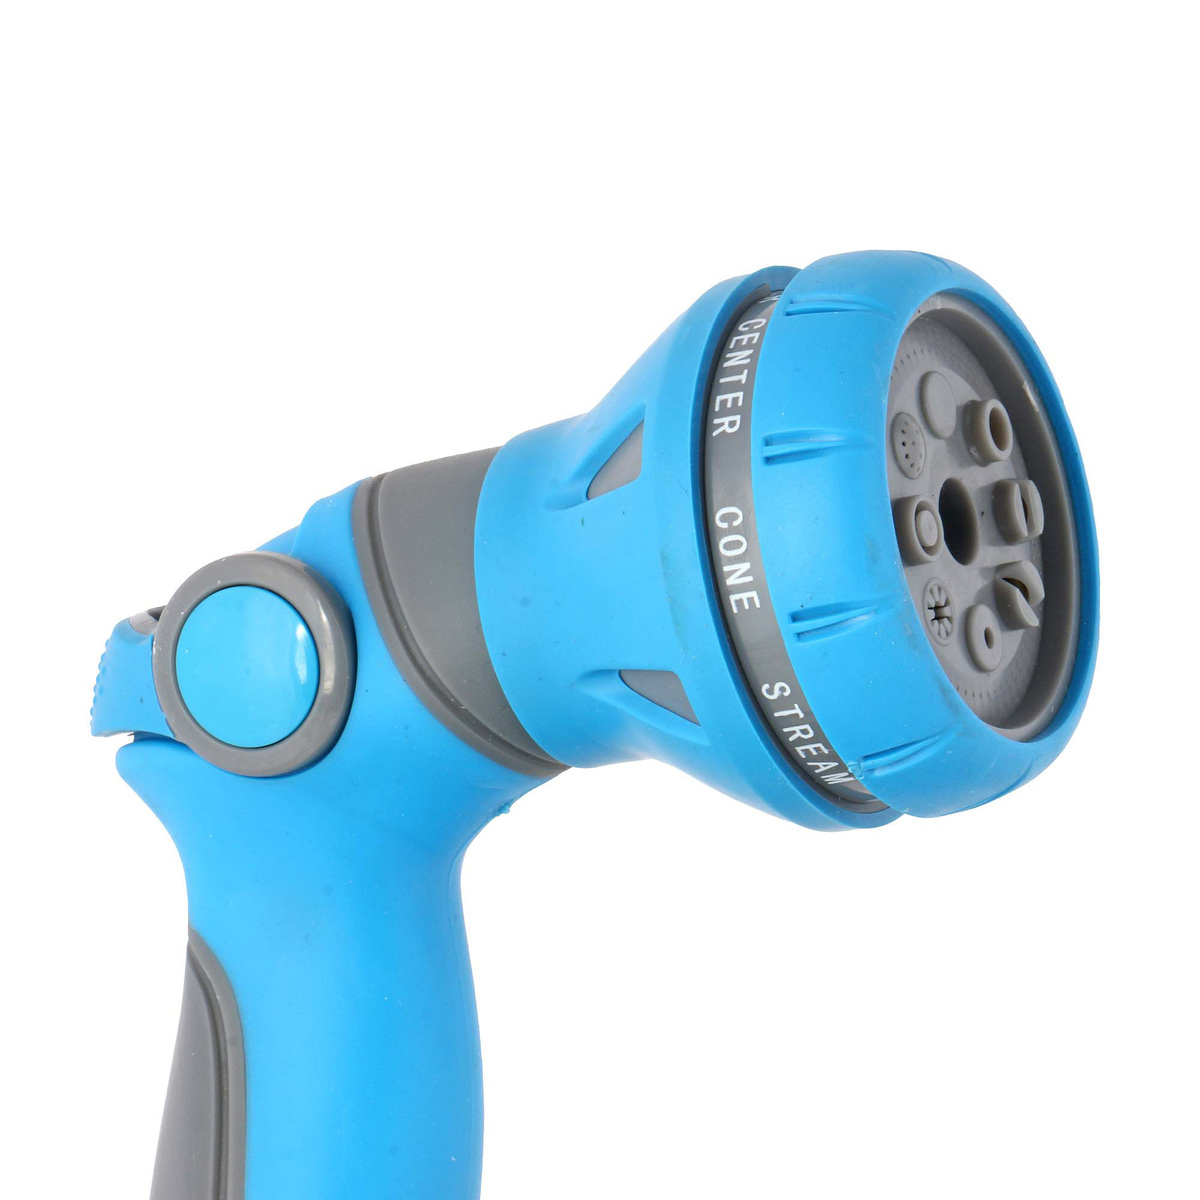 Aqua Craft Pistol Spray, 8 Functions, Blue/Grey, 21001